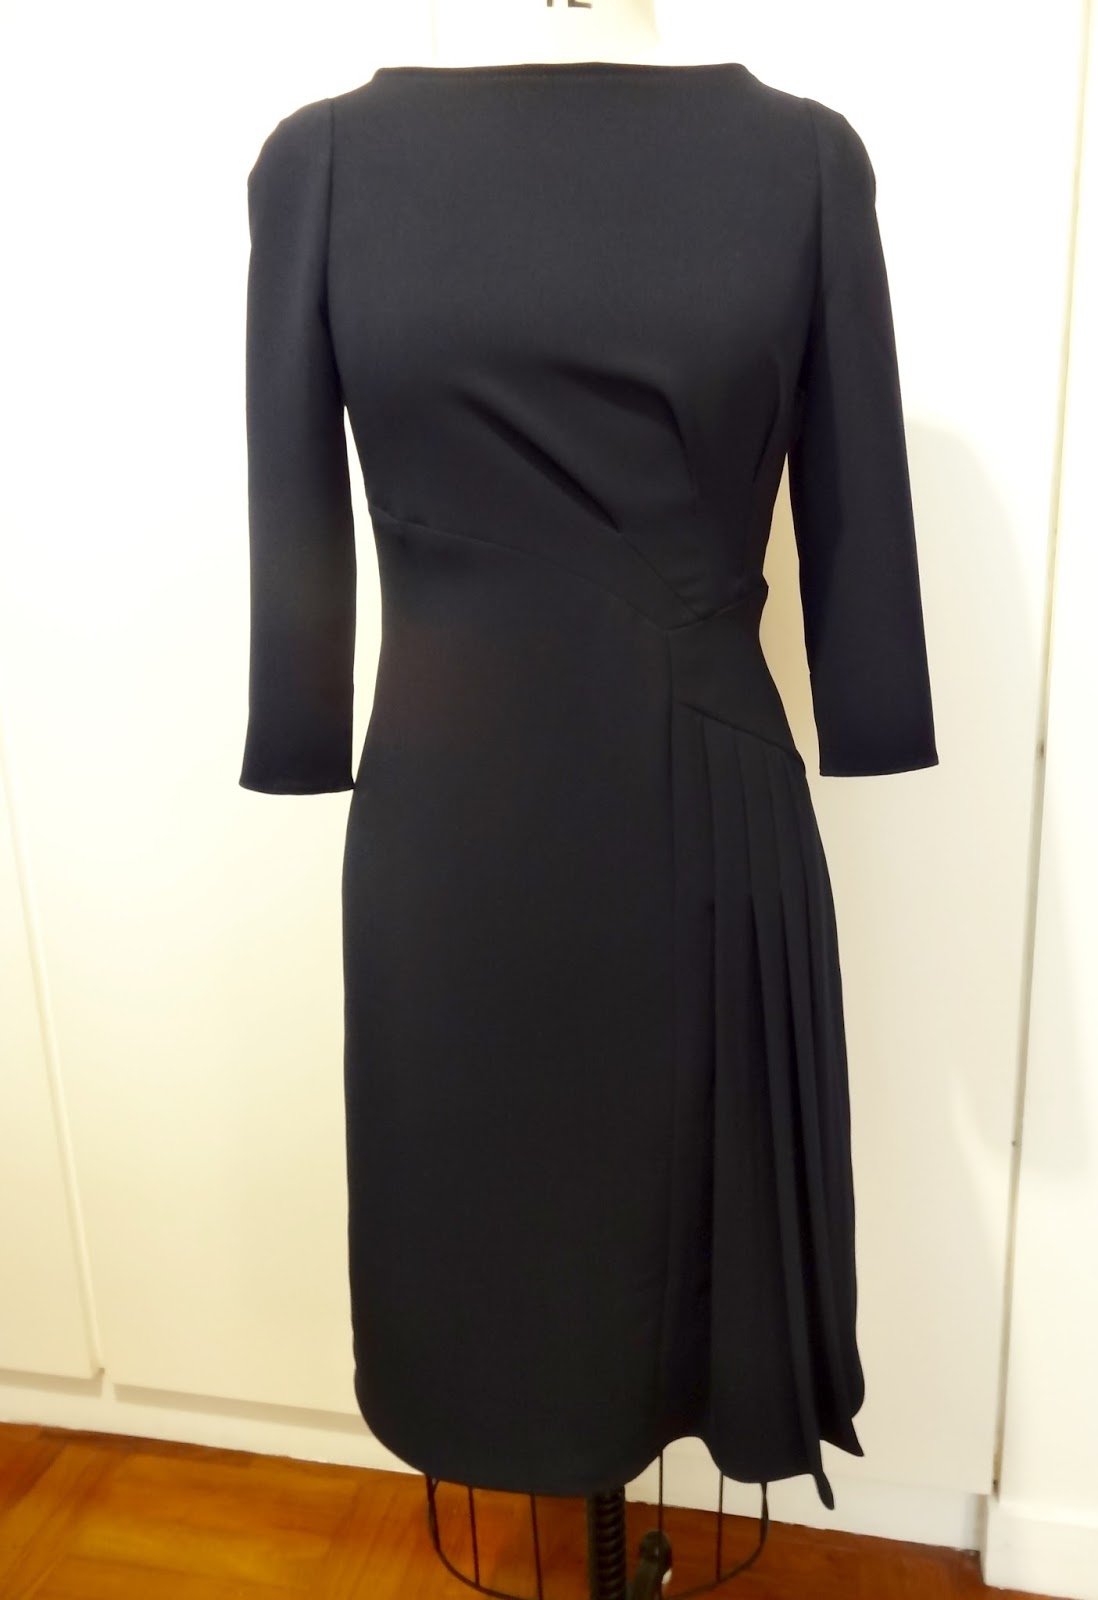 BurdaStyle 12/2015 - 110A Dress | Allison.C Sewing Gallery | Bloglovin’